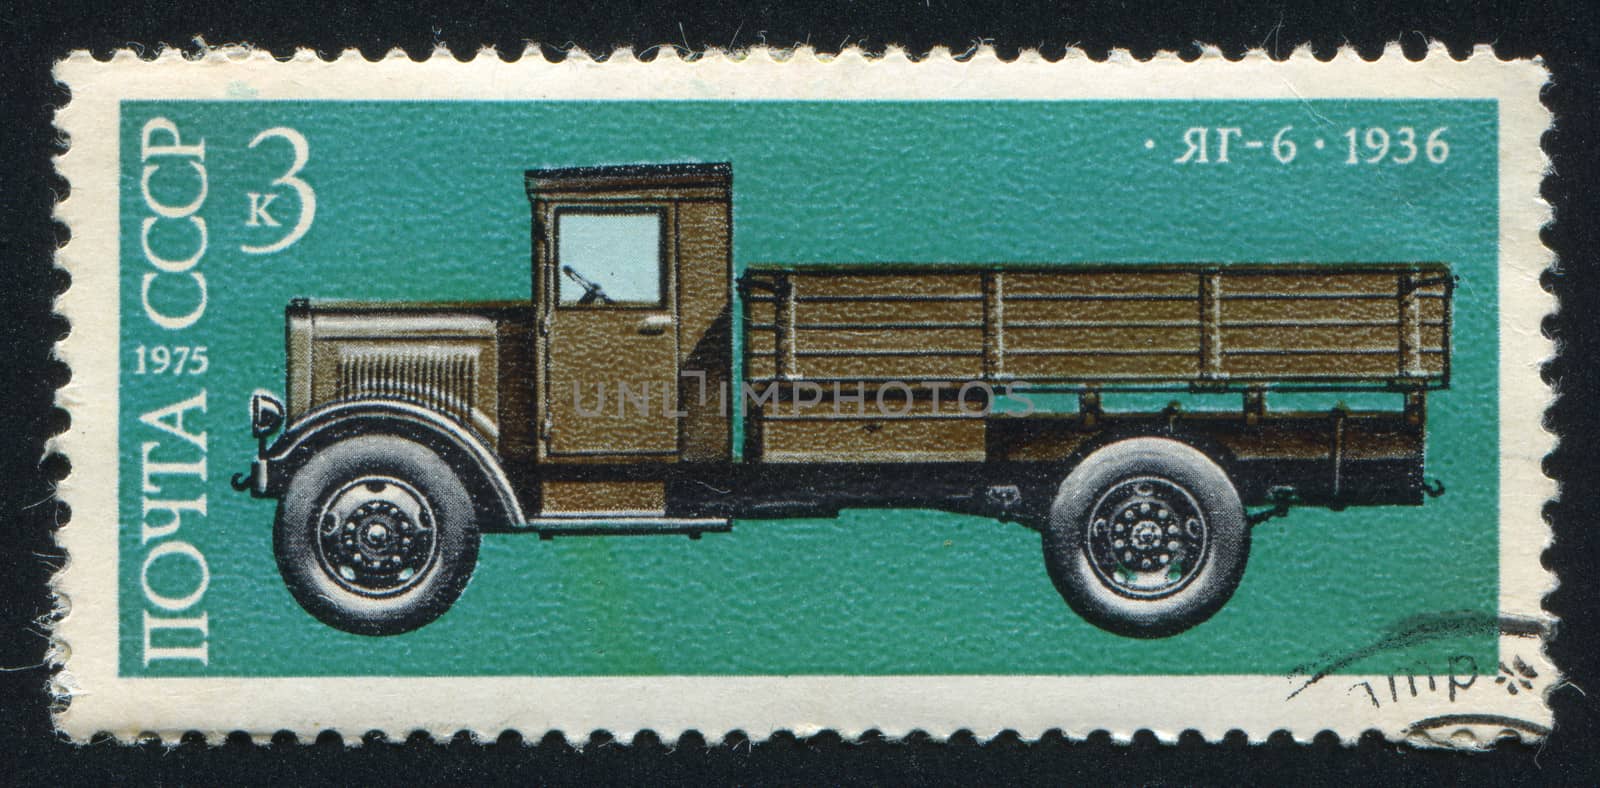 RUSSIA - CIRCA 1975: stamp printed by Russia, shows 5-ton truck, YAG-6, circa 1975